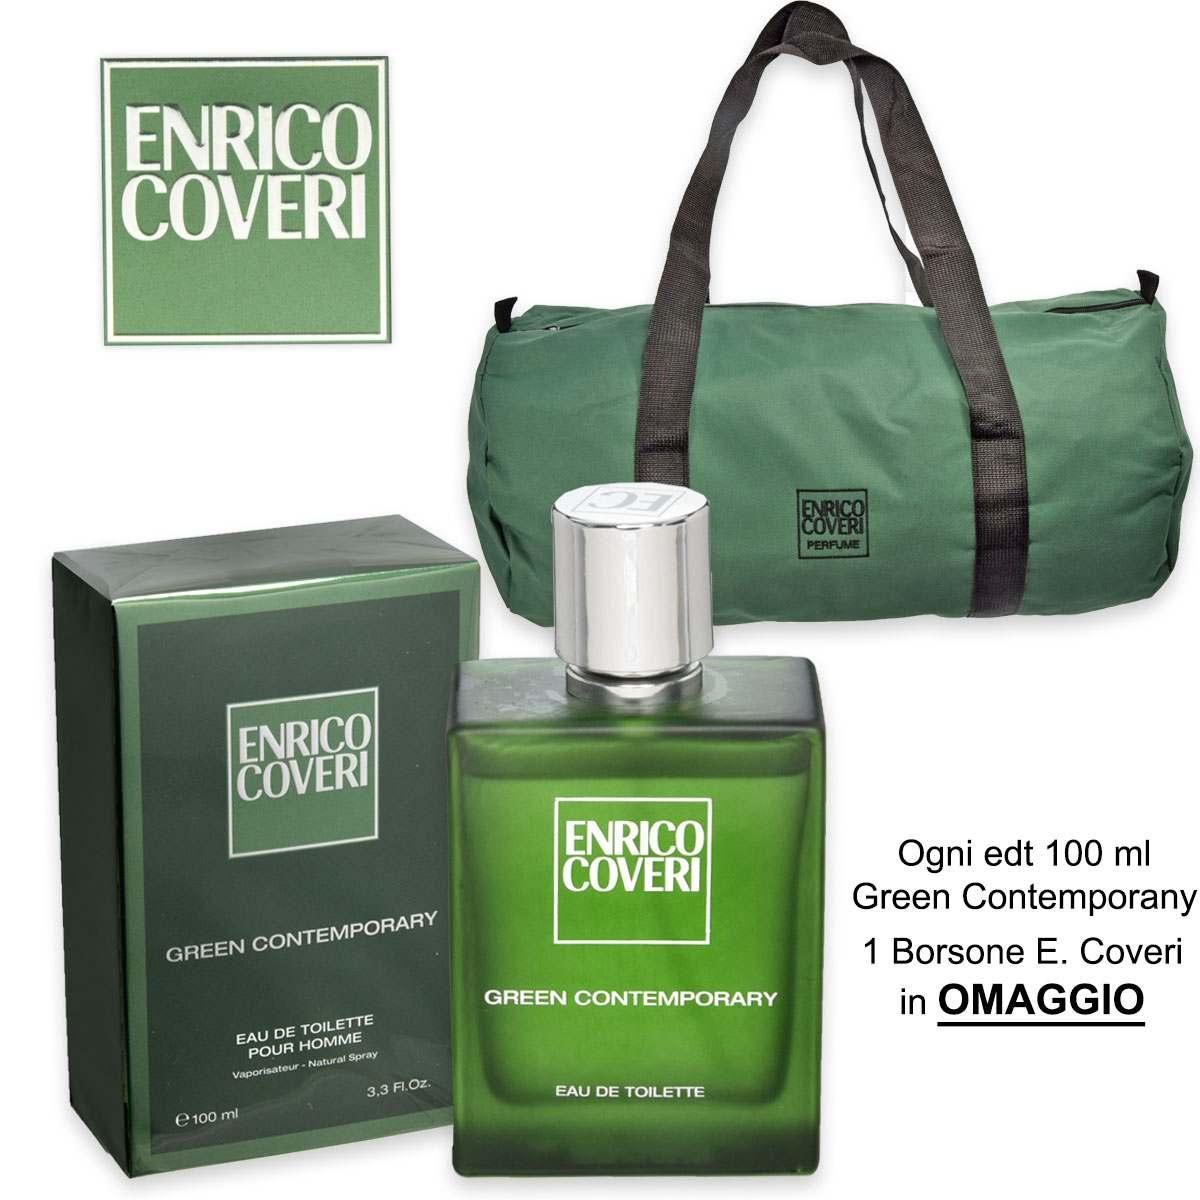 Enrico coveri green contemporary pour homme edt 100 ml